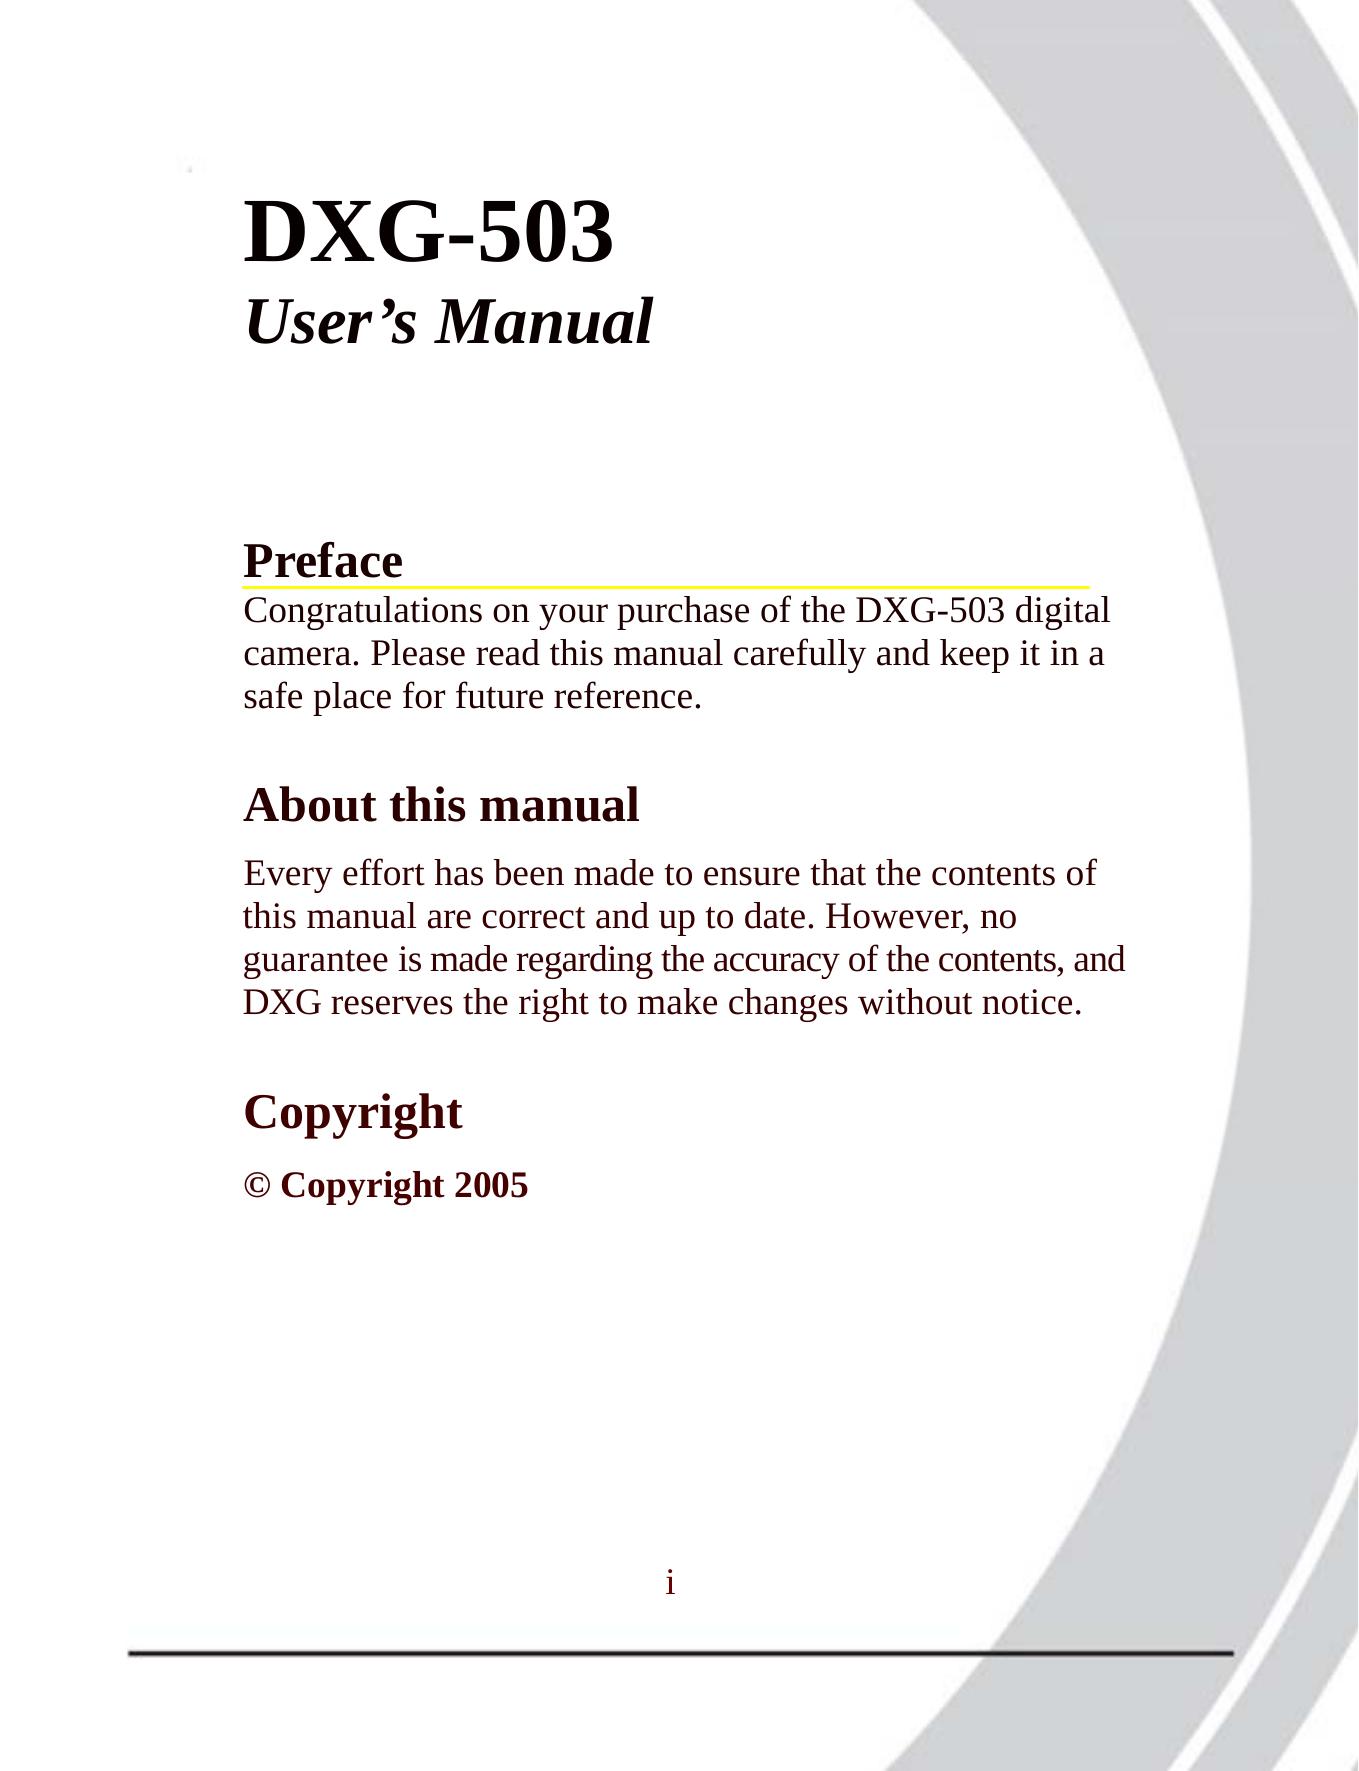 DXG Technology DXG-503 Digital Camera User Manual